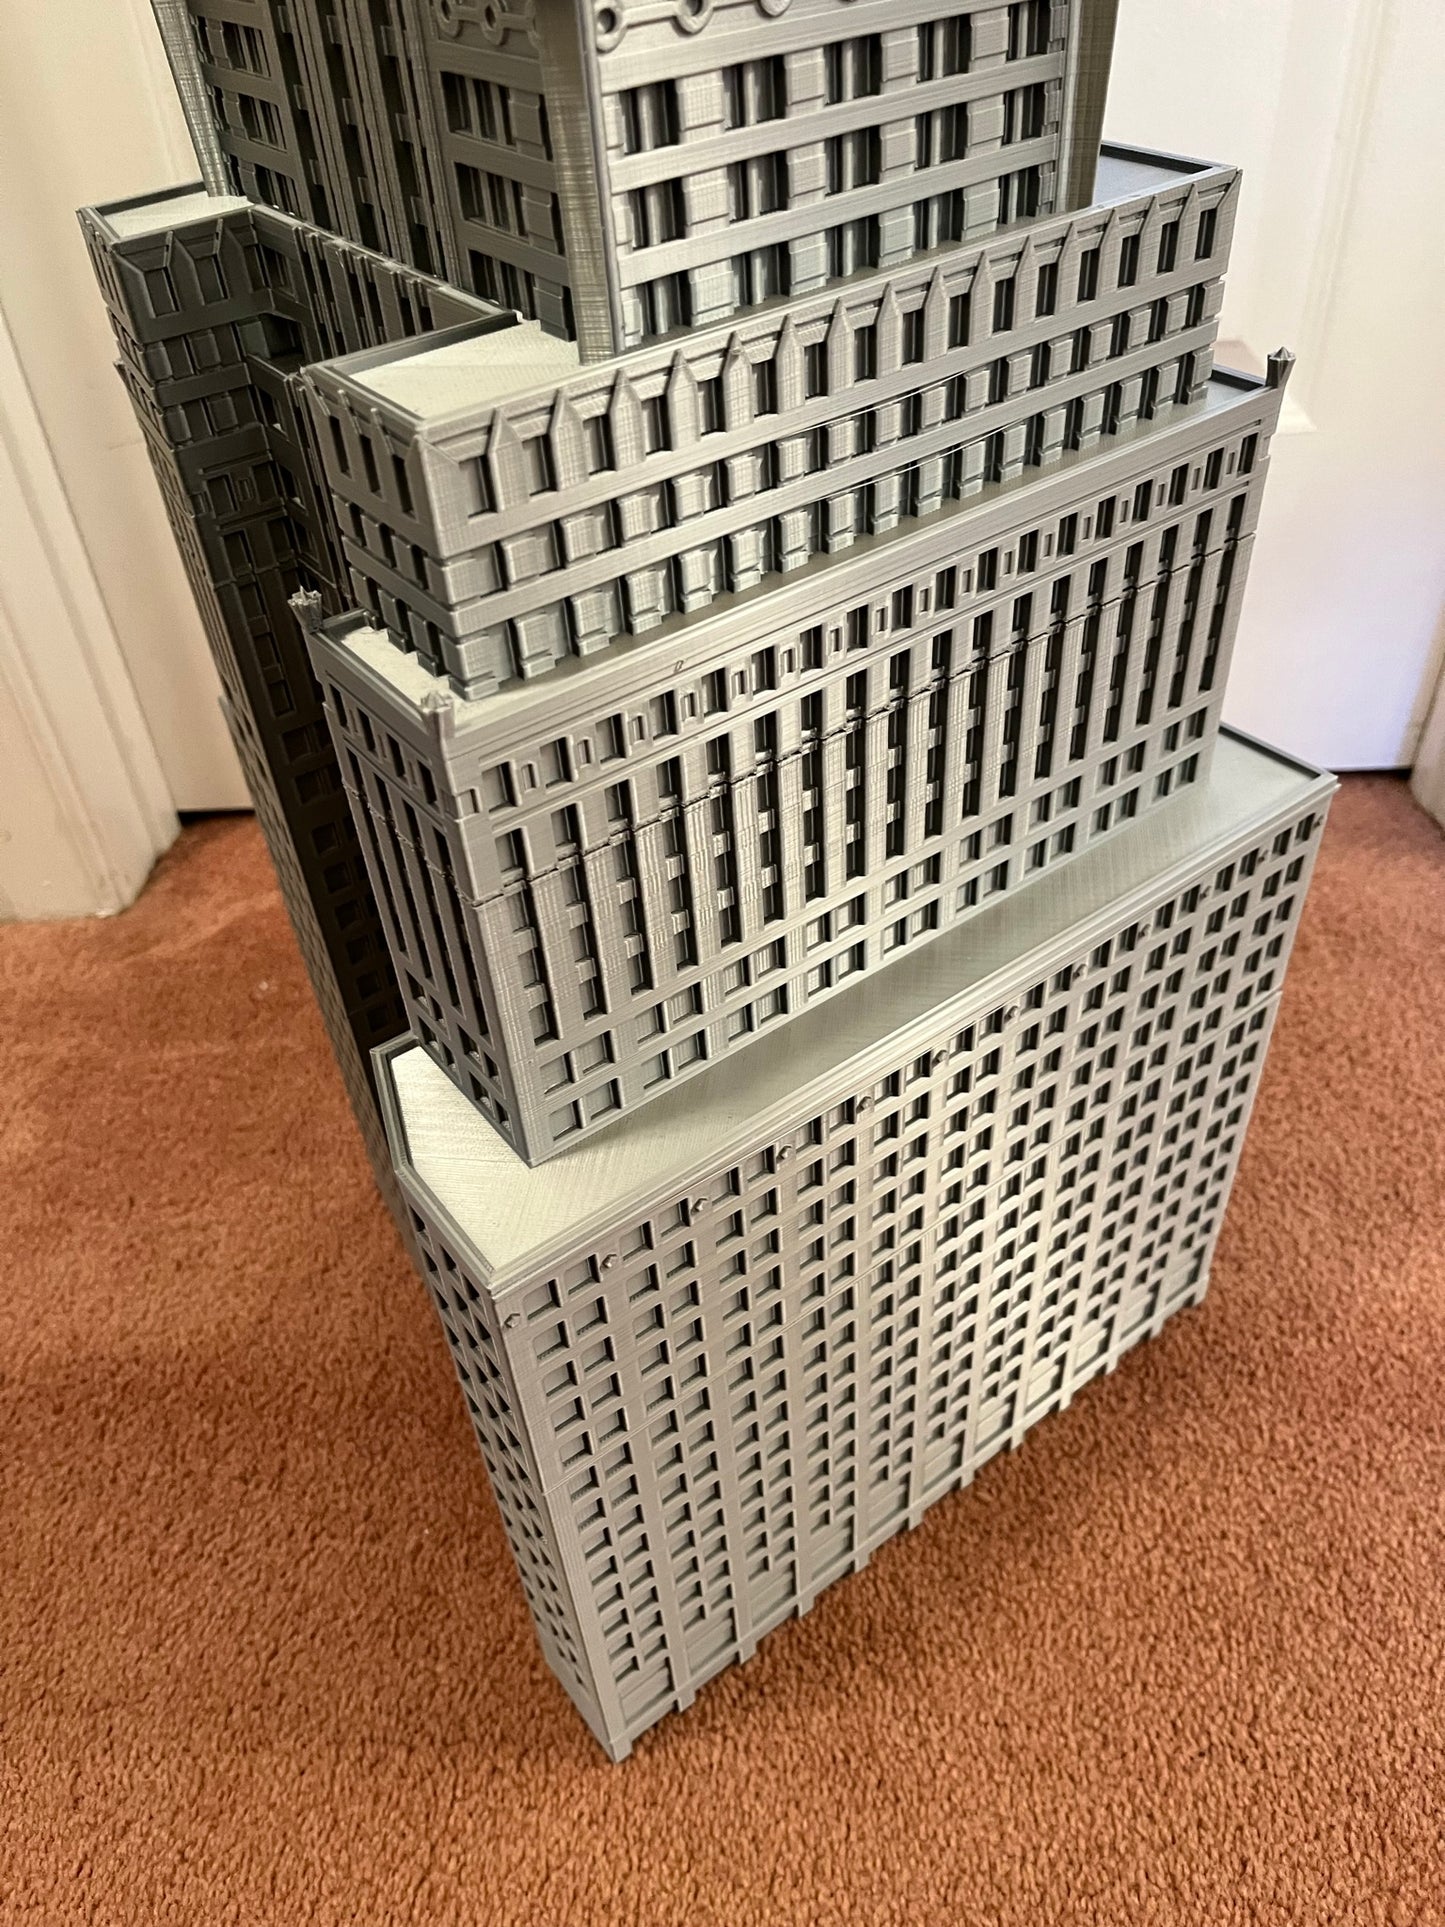 Extra Large Chrysler Building Model- 3D Printed